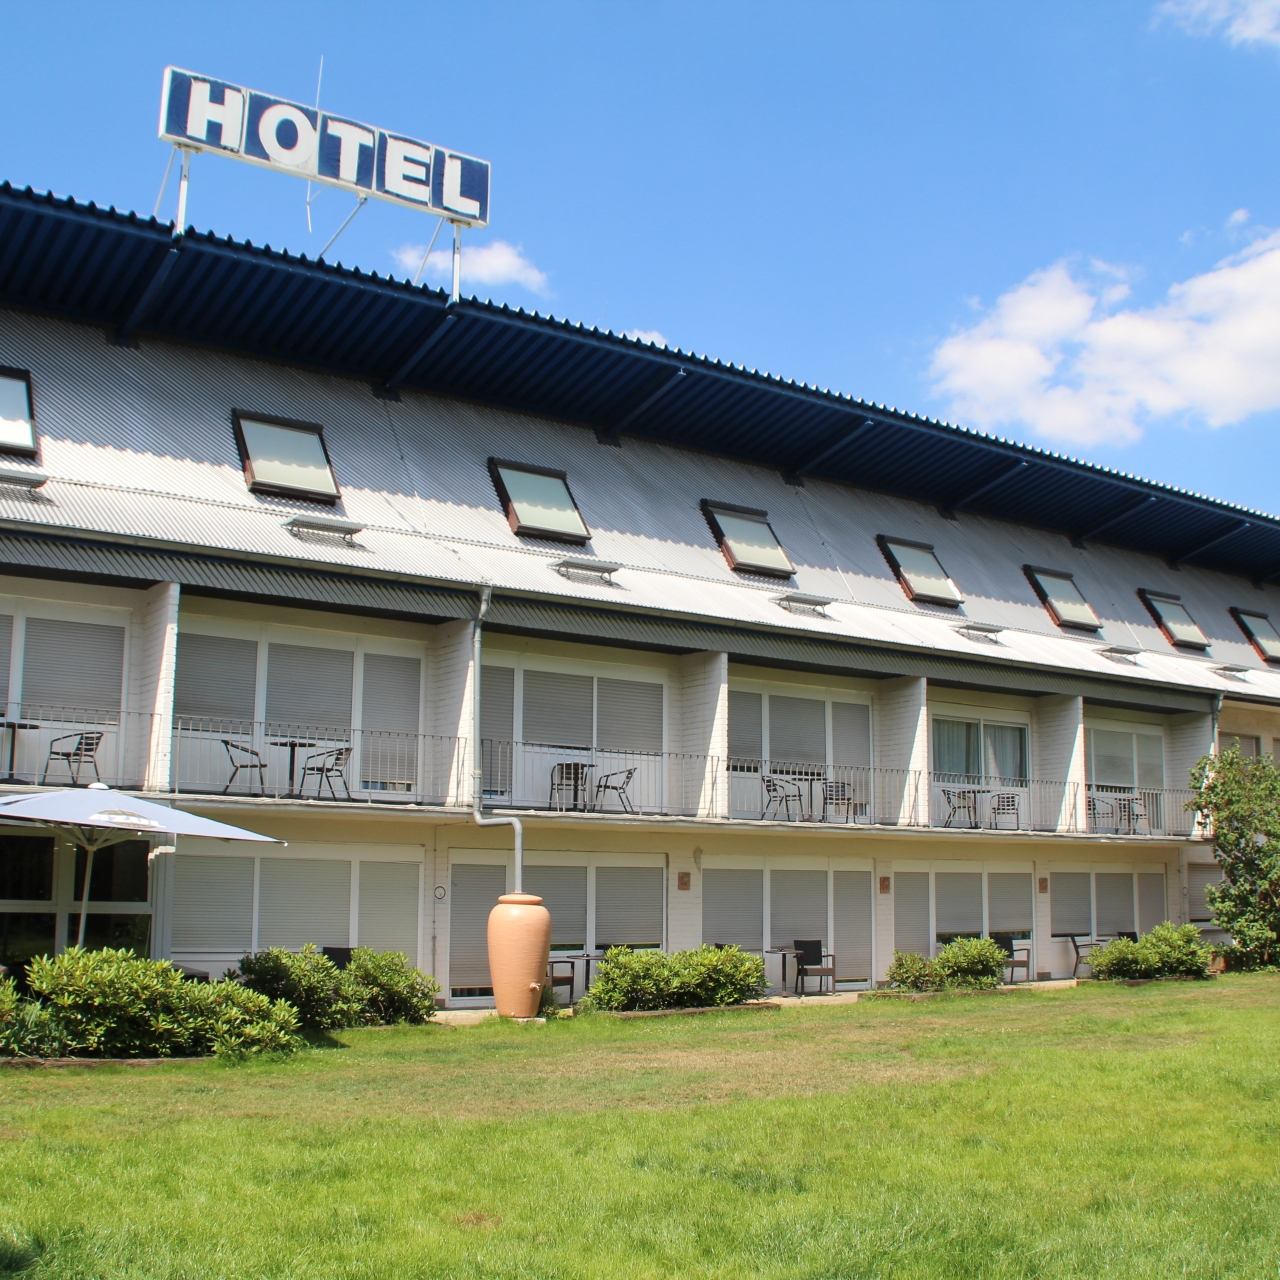 Hotel Hangelar North Rhine-Westphalia at HRS with free services